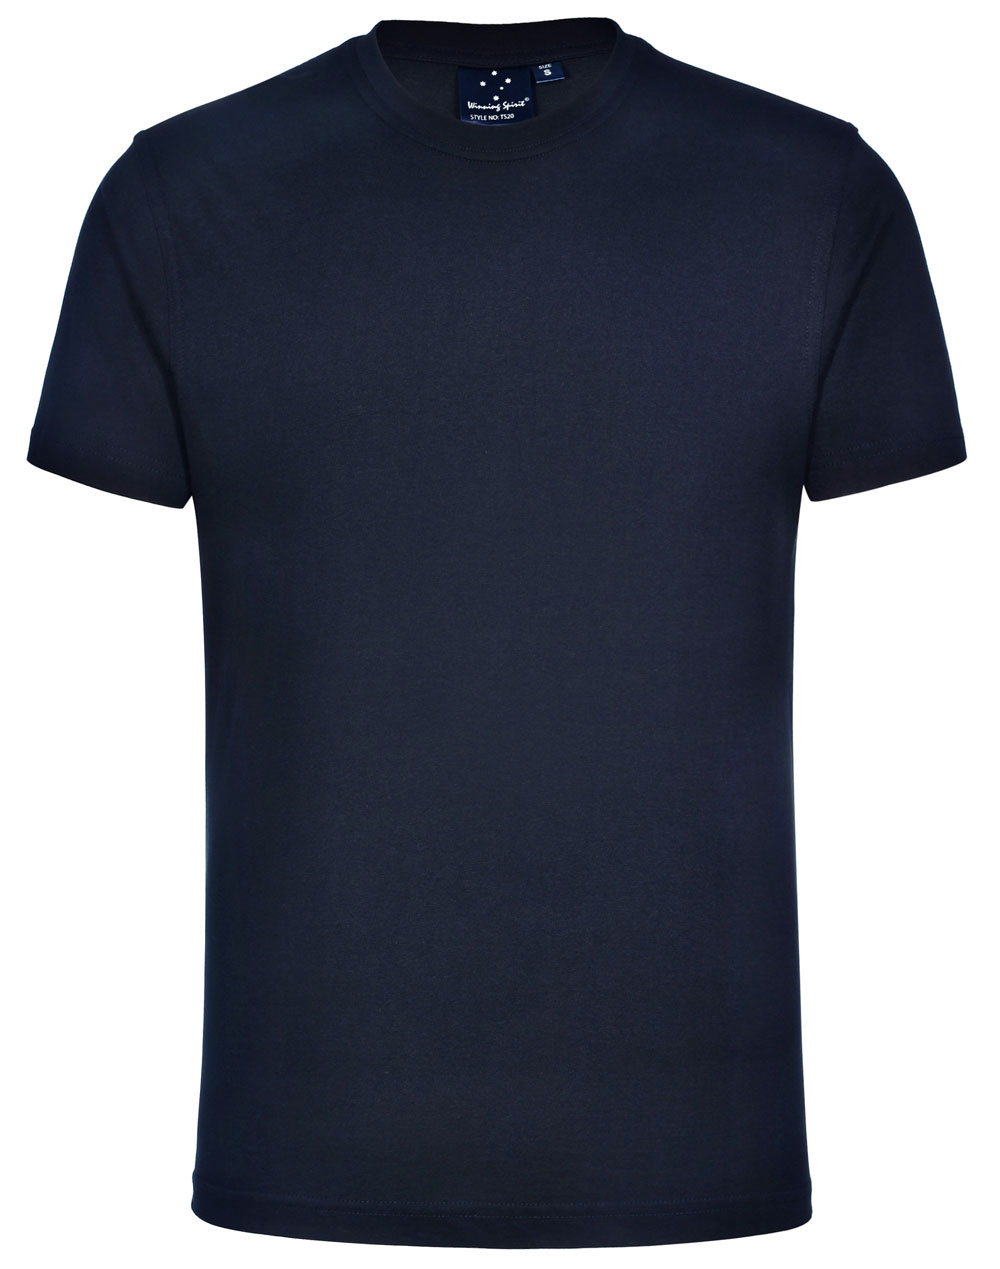 Custom Made (Navy) Budget Unisex Crew Neck T-Shirts Mens Online Perth Australia